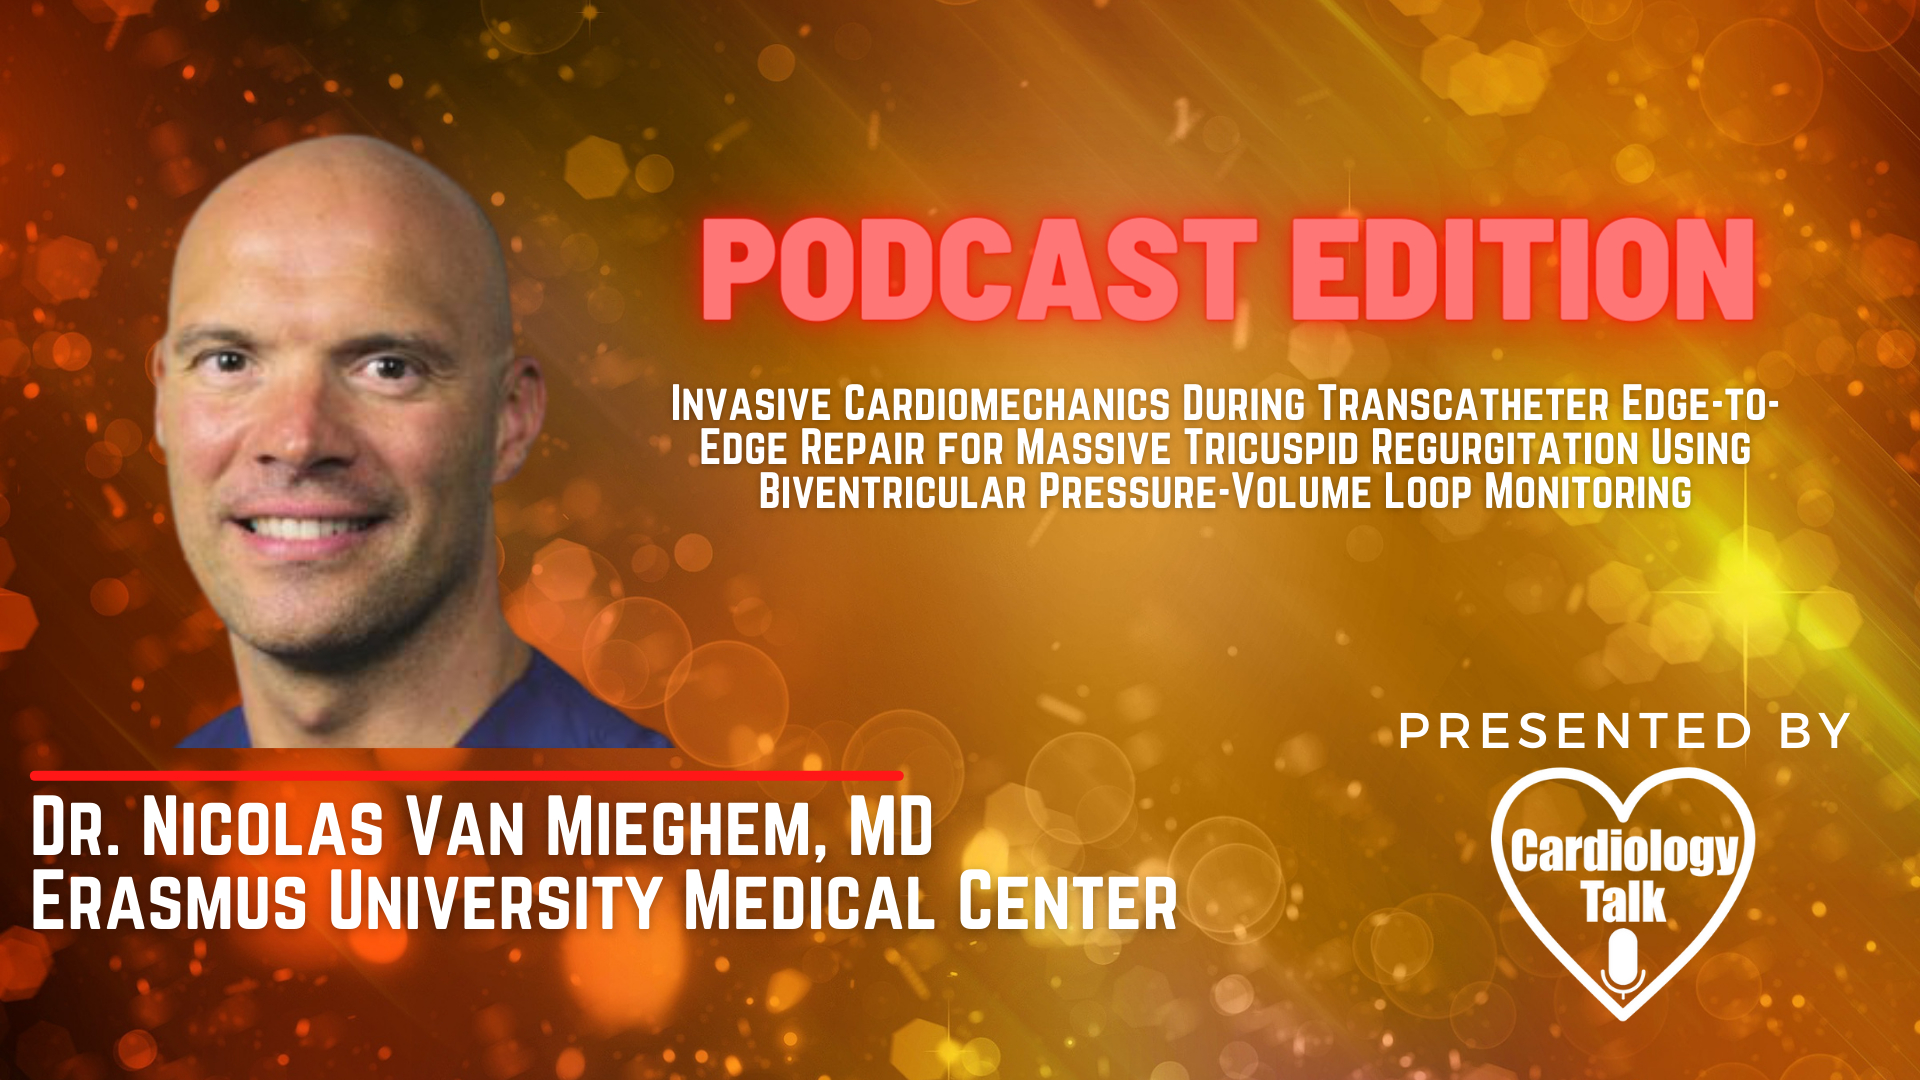 Dr. Nicolas Van Mieghem, MD - Invasive Cardiomechanics During Transcatheter Edge-to-Edge Repair for Massive Tricuspid Regurgitation Using Biventricular Pressure-Volume Loop Monitoring